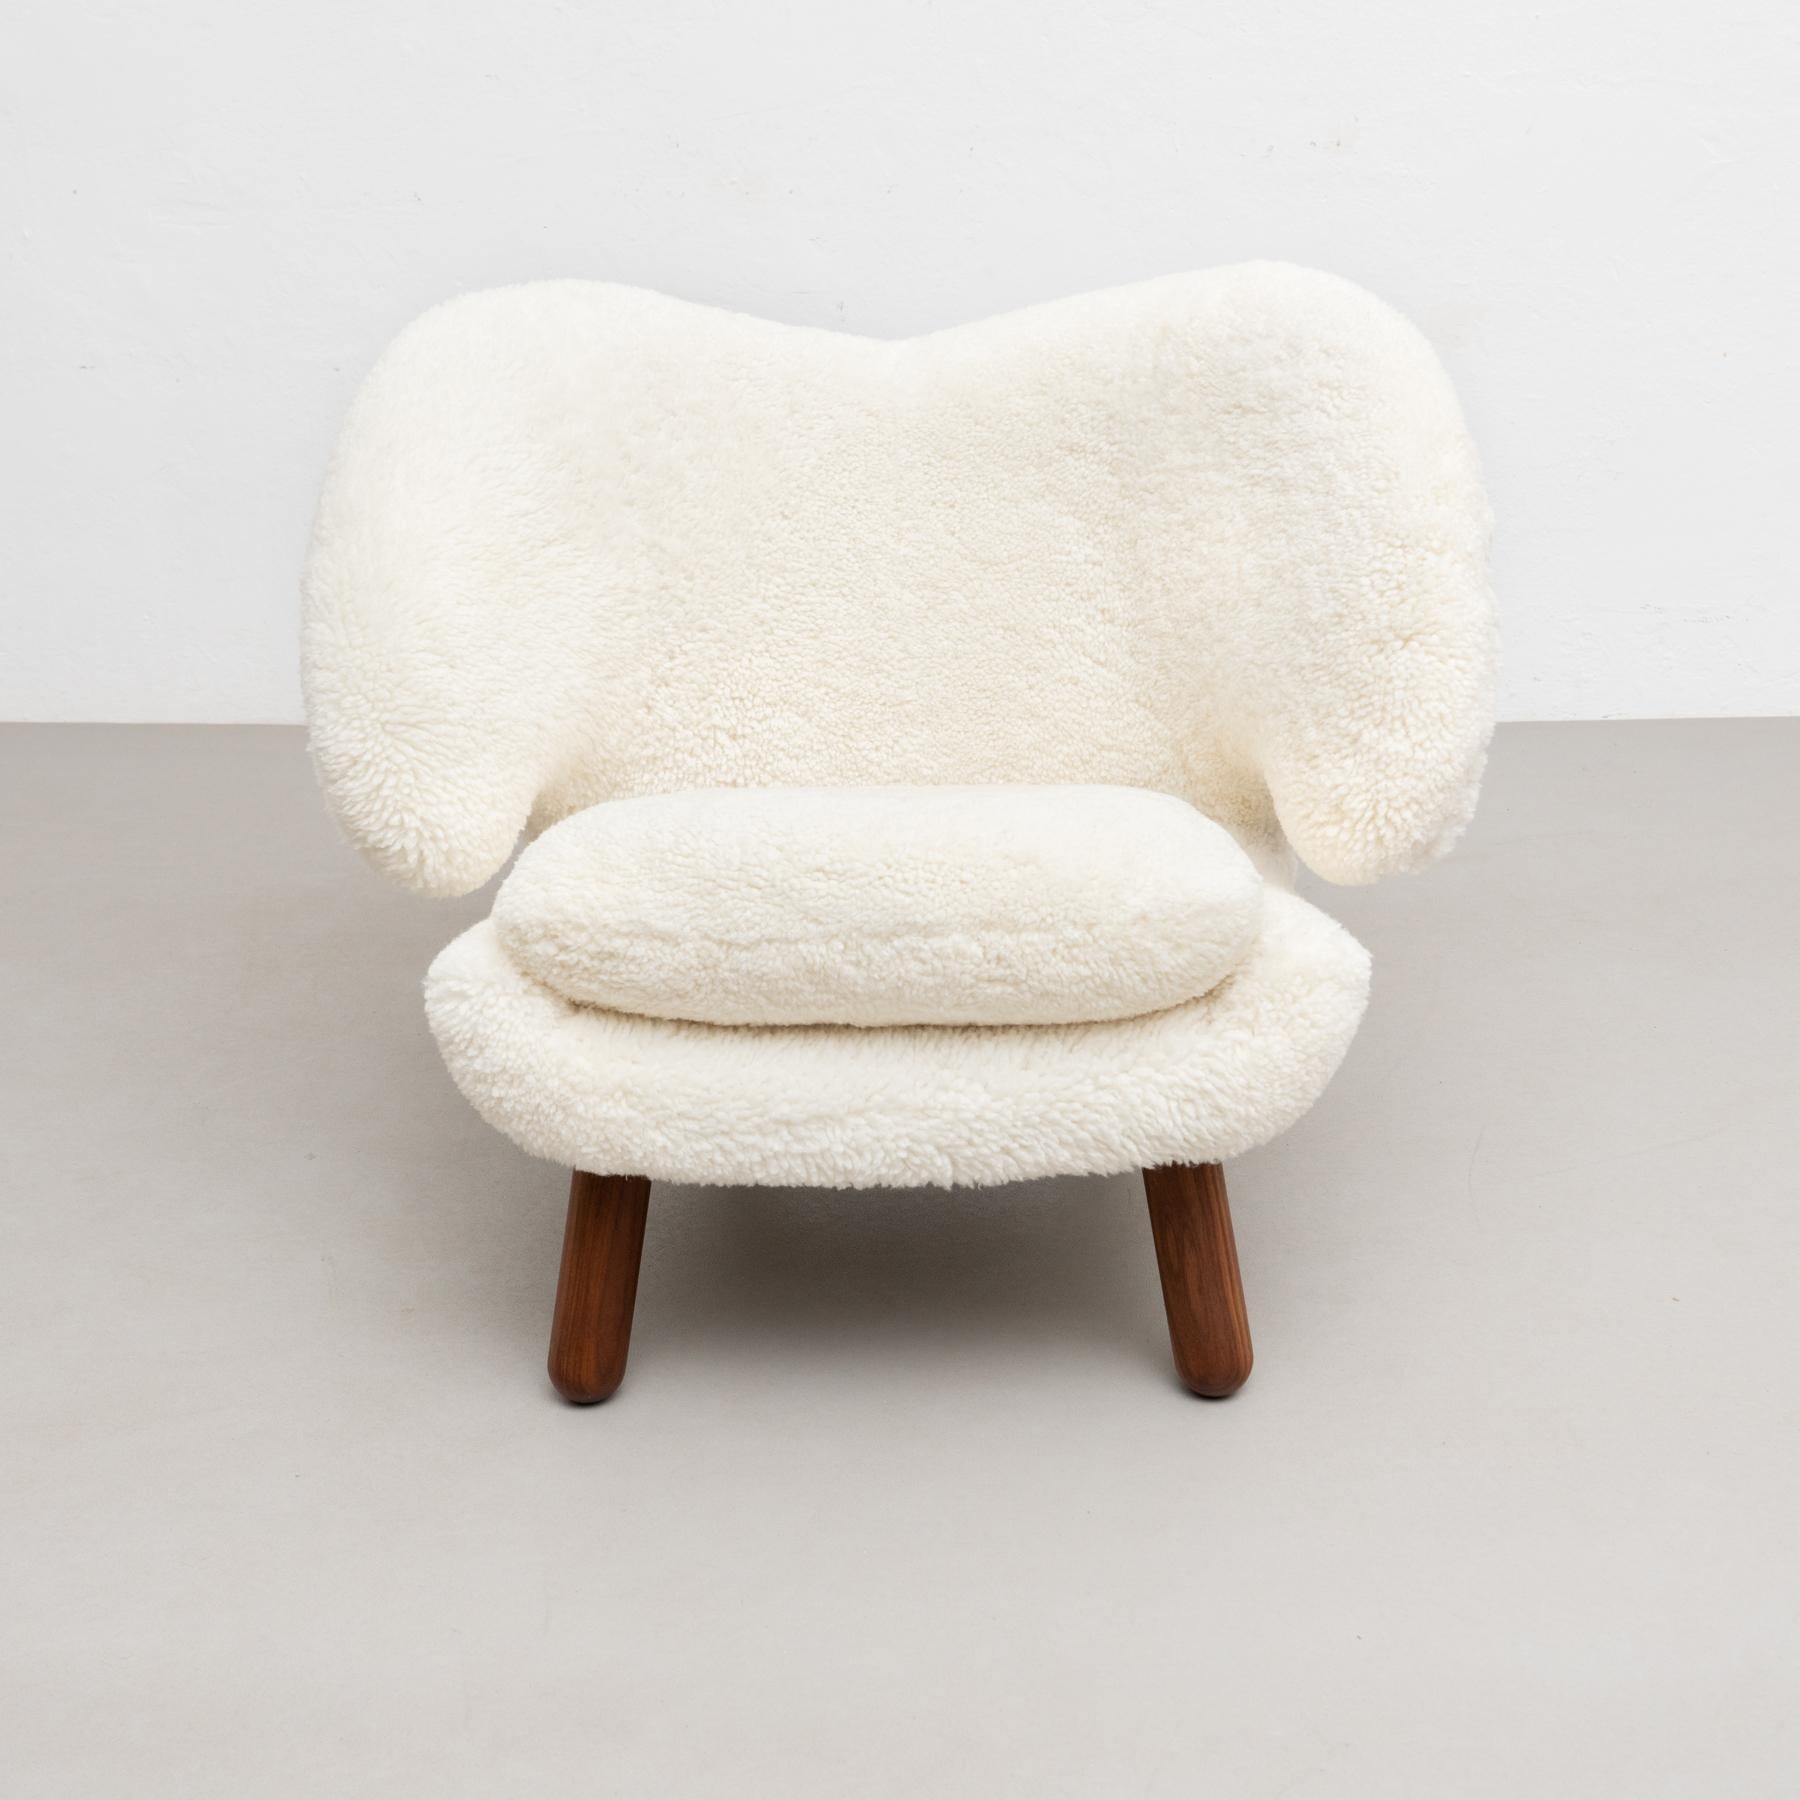 Finn Juhl Pelican Chair Upholstered in Offwhite Sheepskin (Chaise Pélican recouverte de peau de mouton blanc cassé) en vente 4